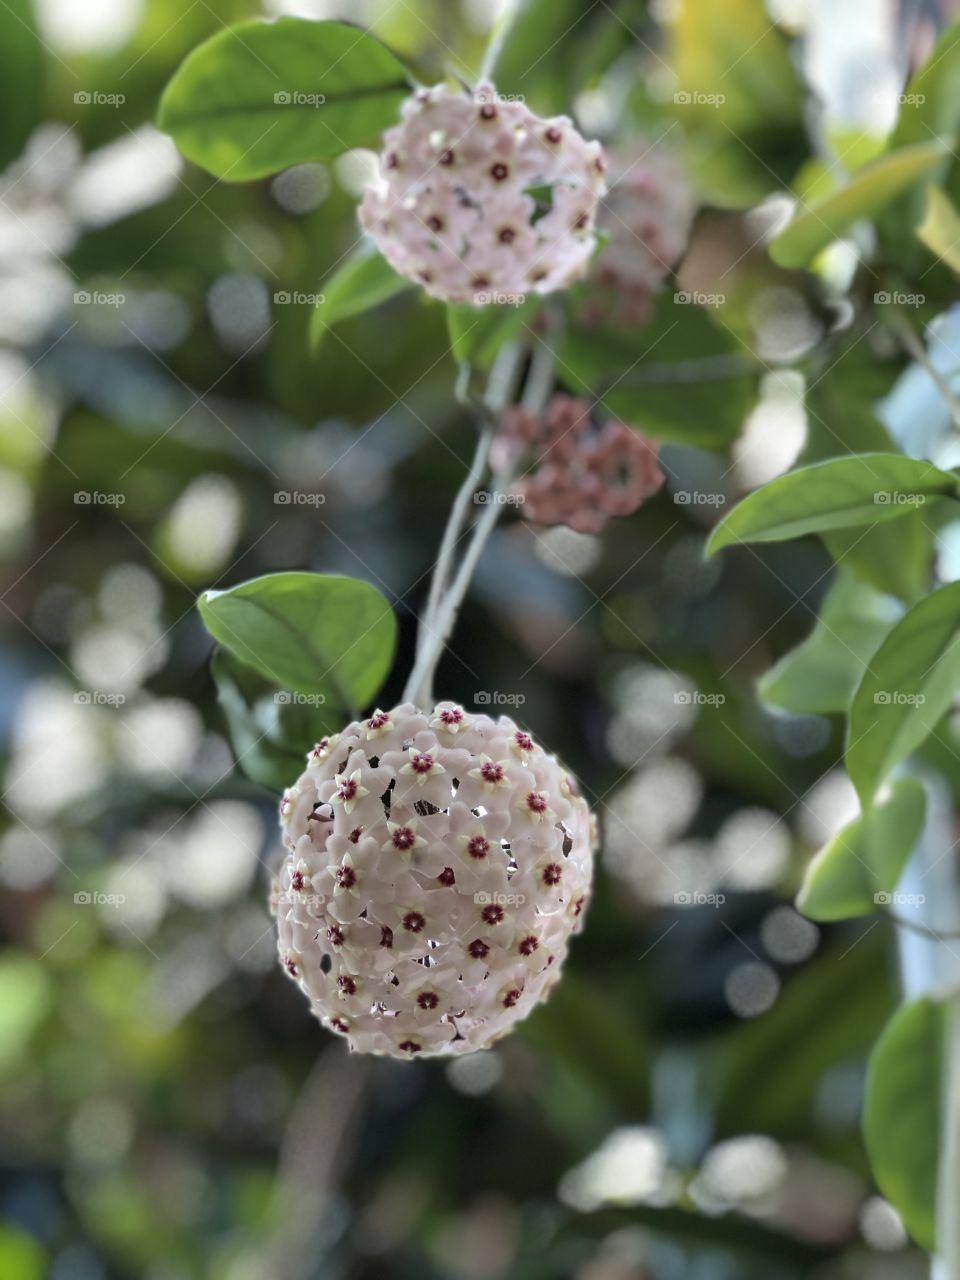 Hoya hanging plant in bloom